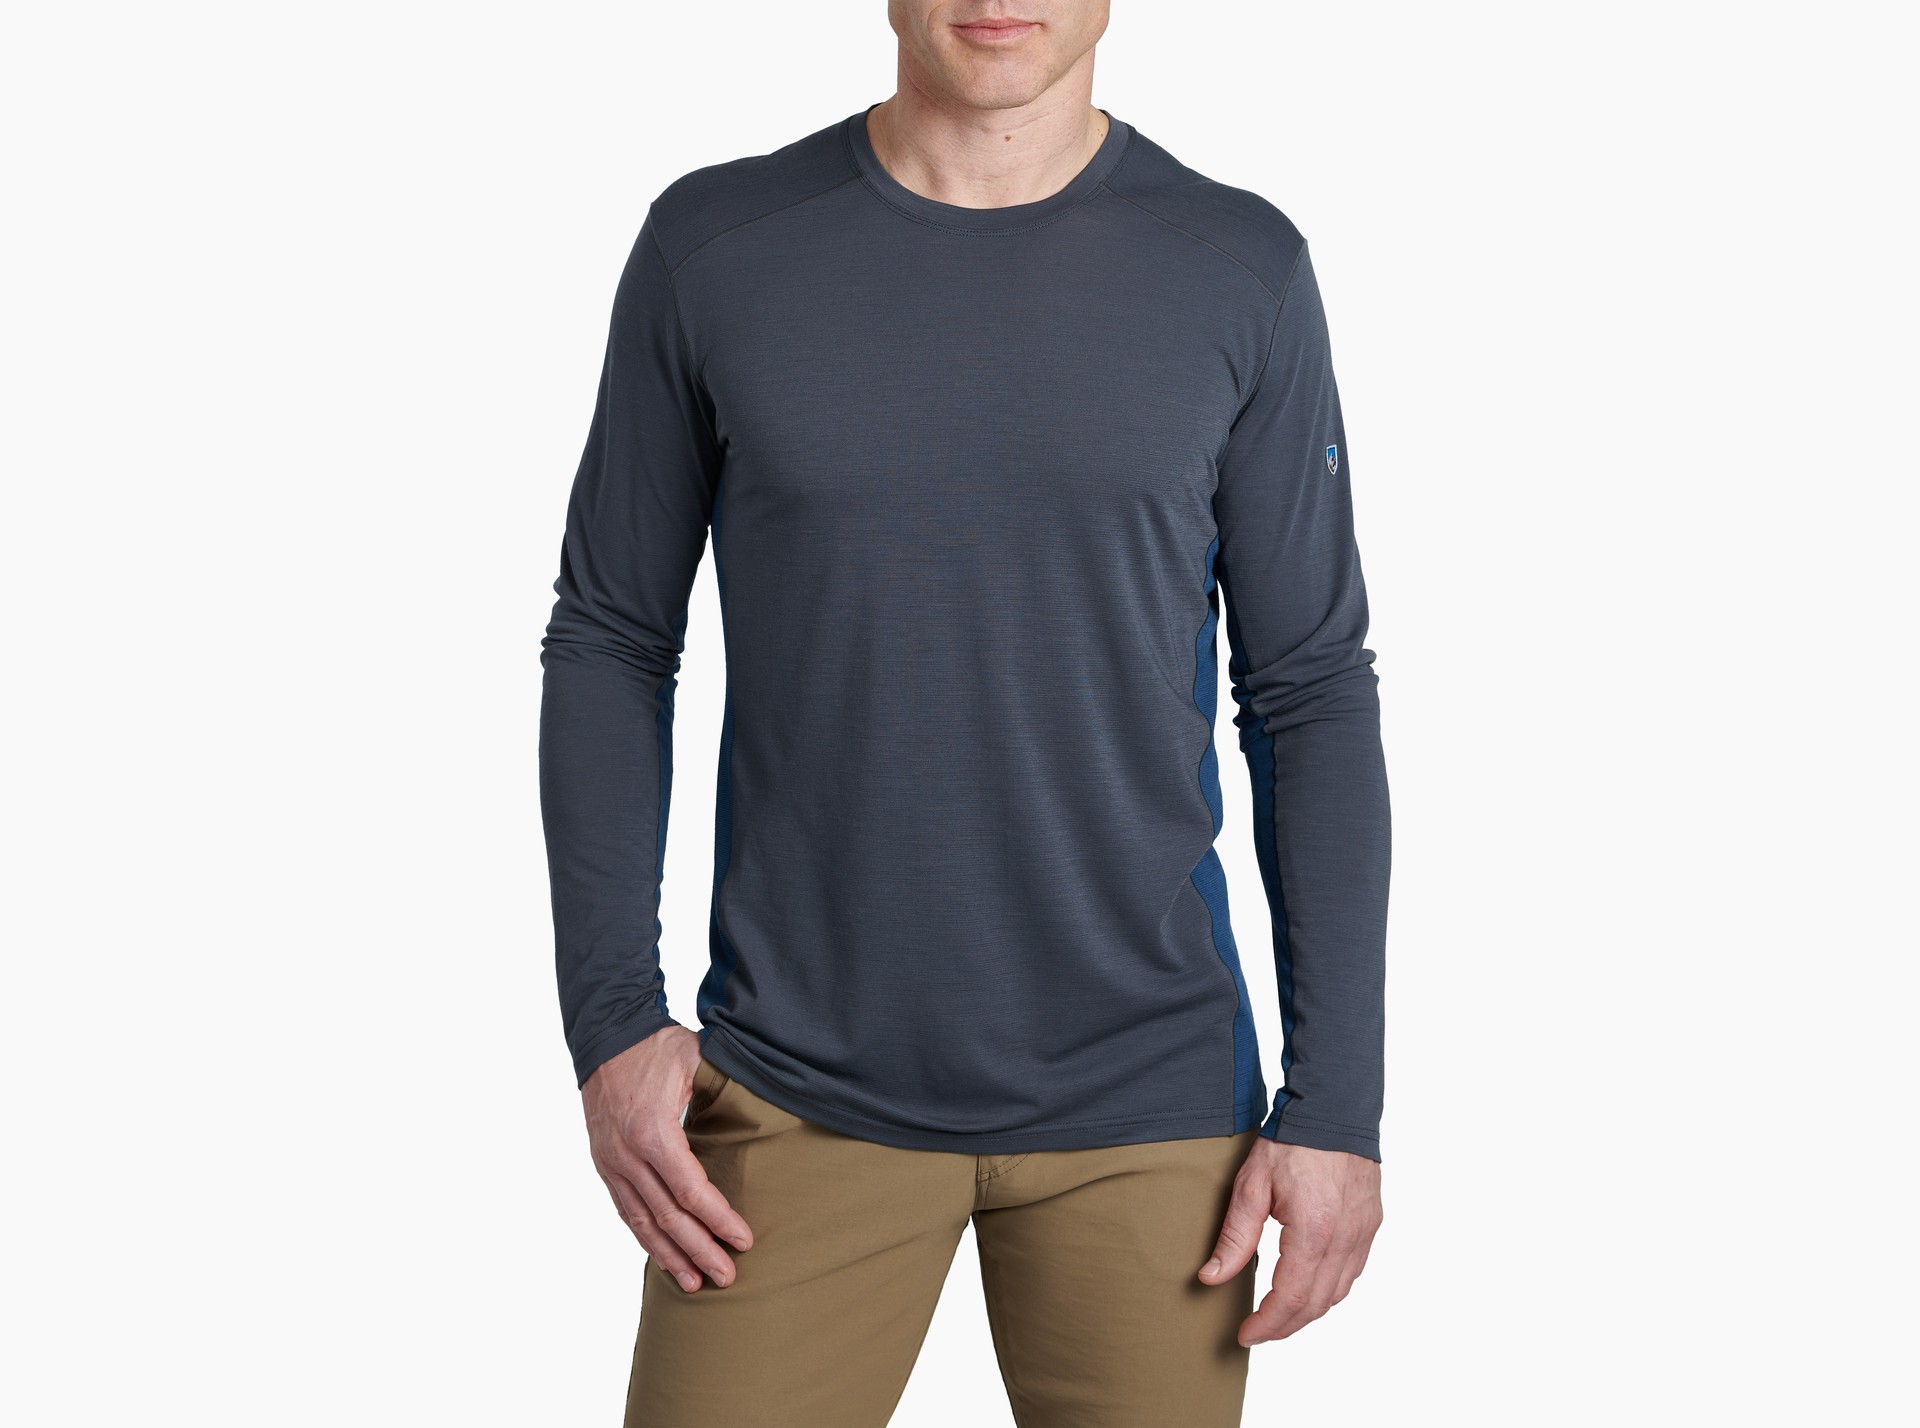 Valiant™ in Men's Long Sleeve | KÜHL Clothing